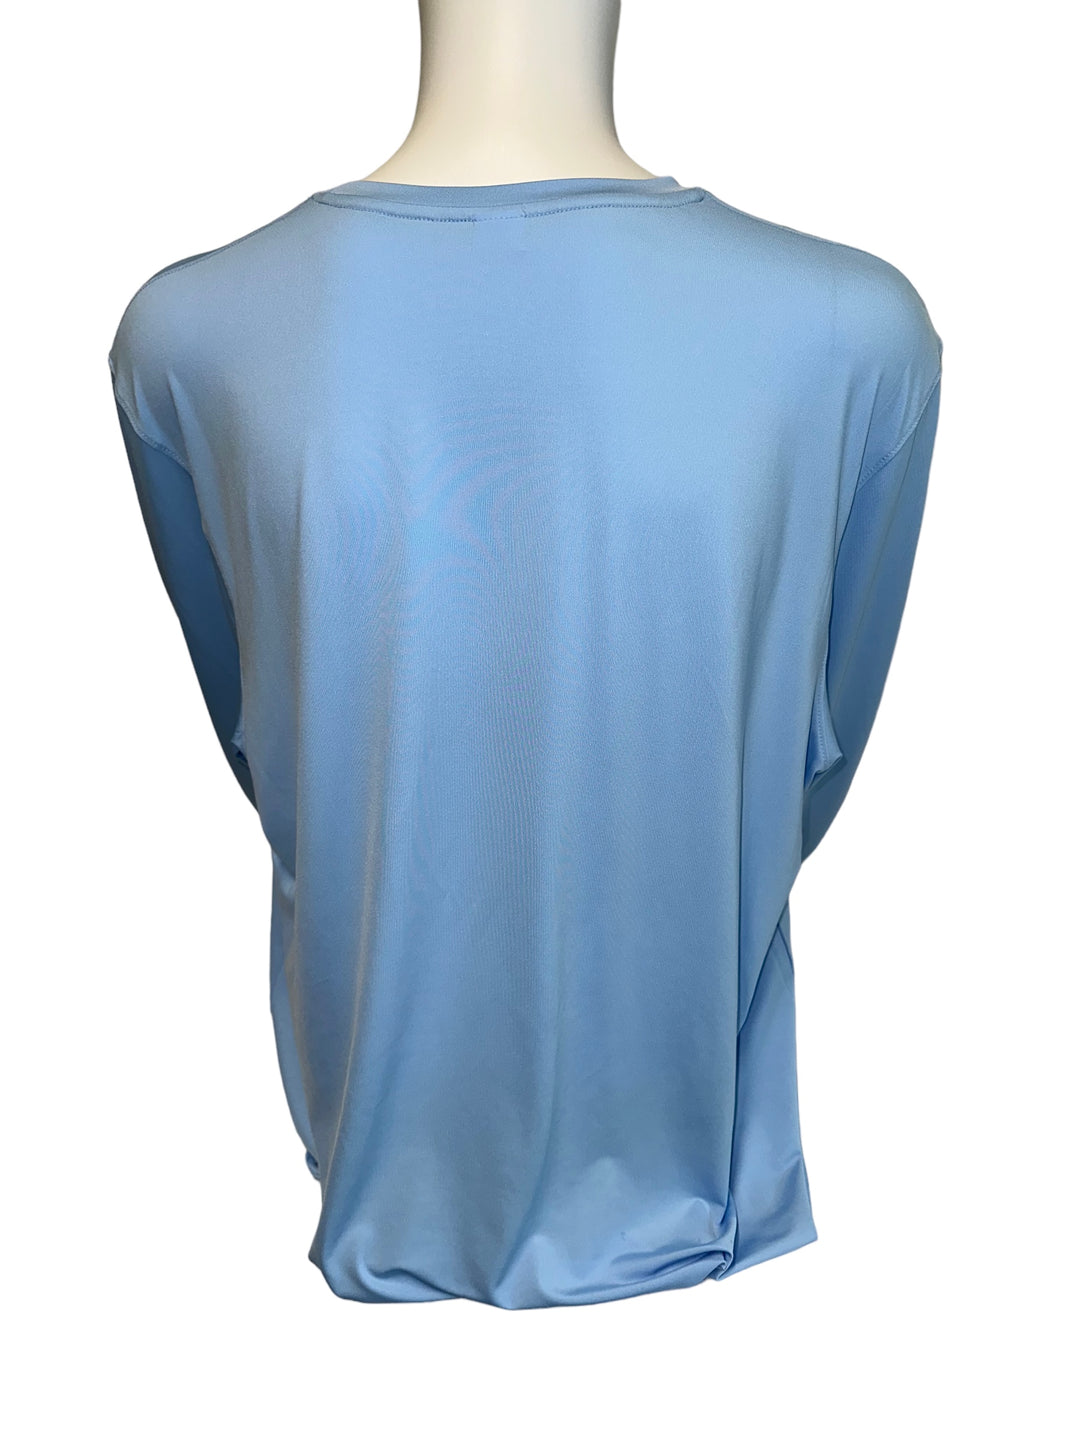 Men's Paragon Aruba Extreme Performance Long Sleeve Shirt